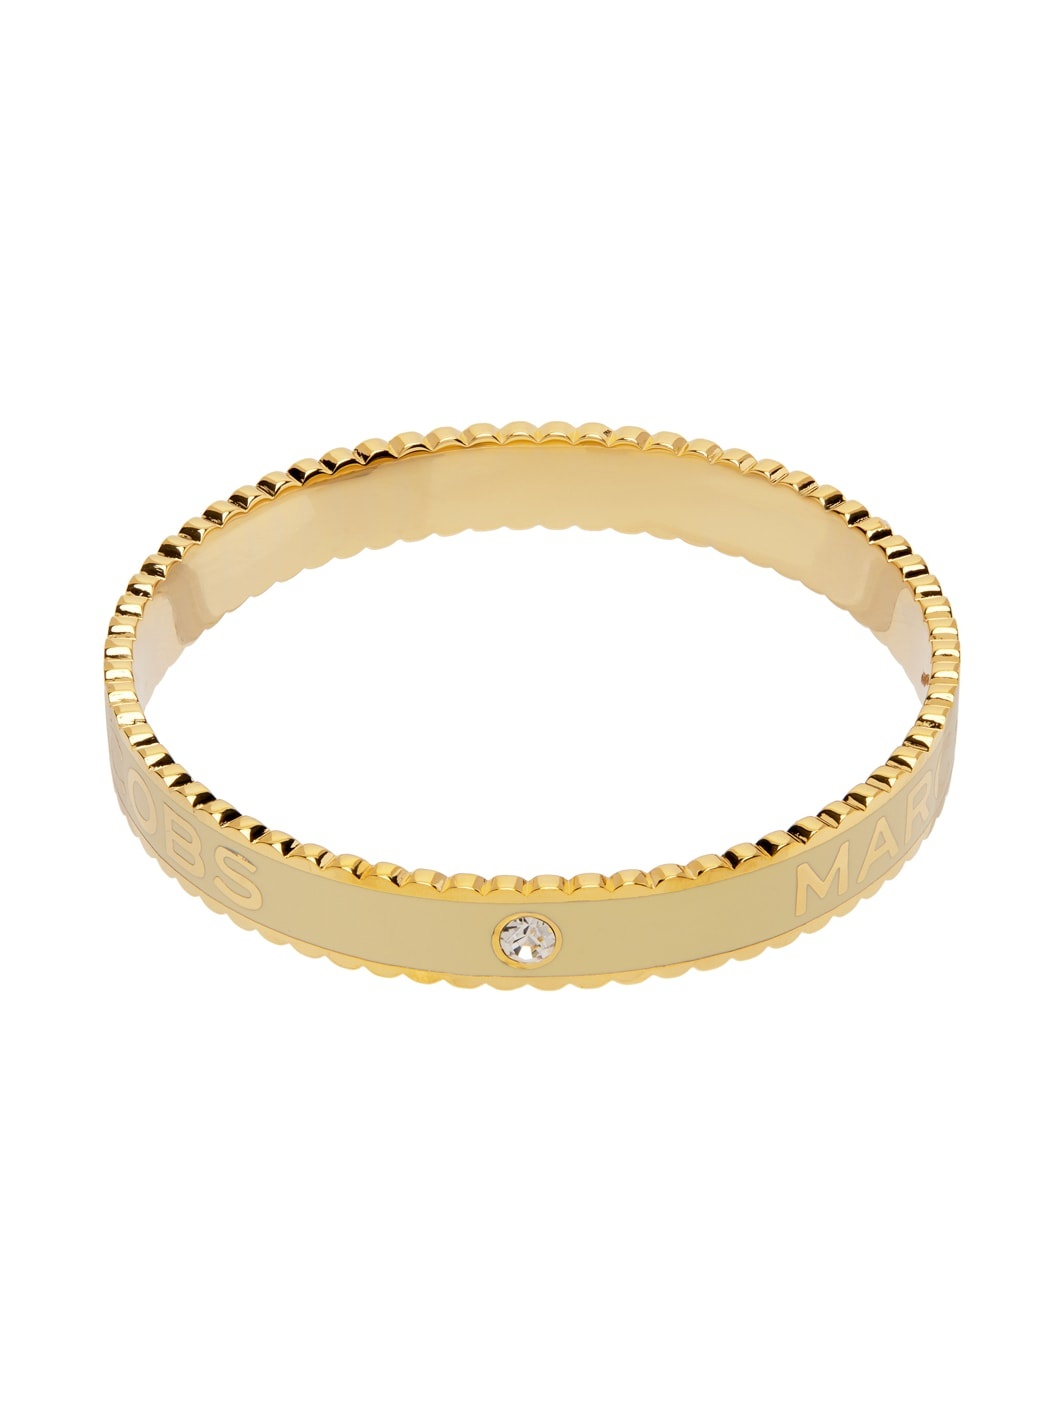 Gold & White 'The Medallion' Cuff Bracelet - 1